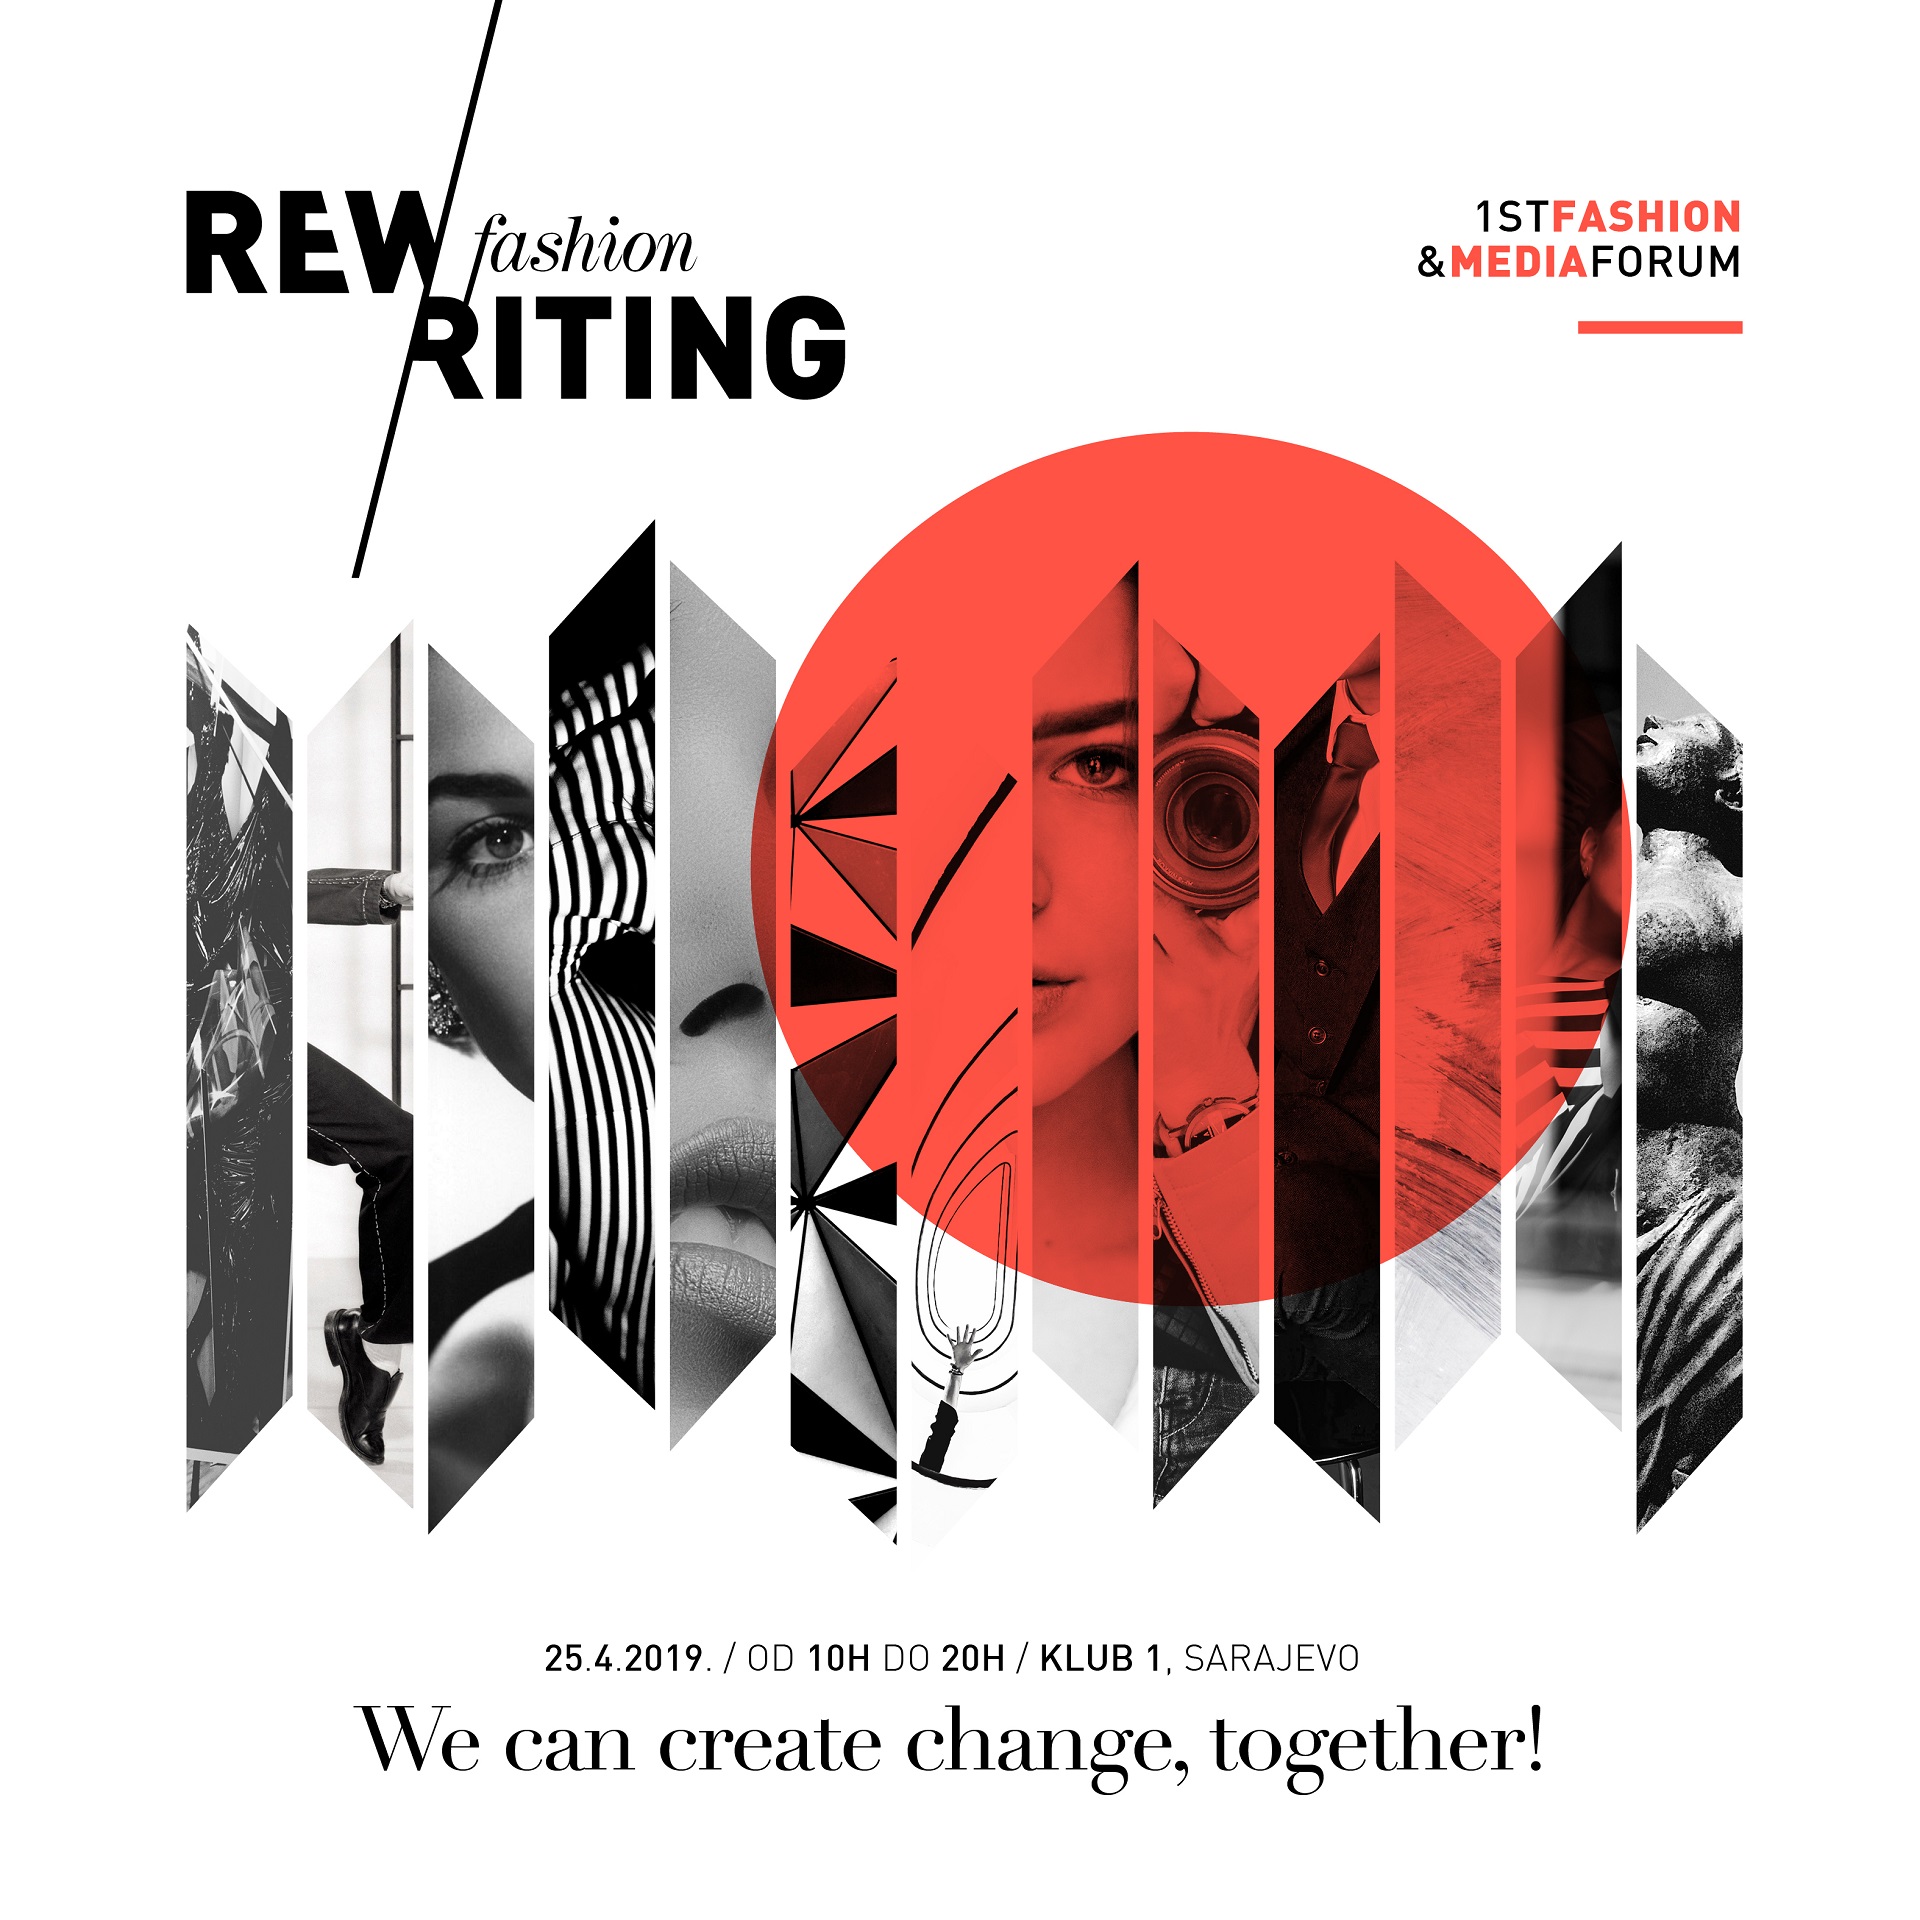  Prvi modni forum u Sarajevu “Rewriting fashion: We can create change, together!“